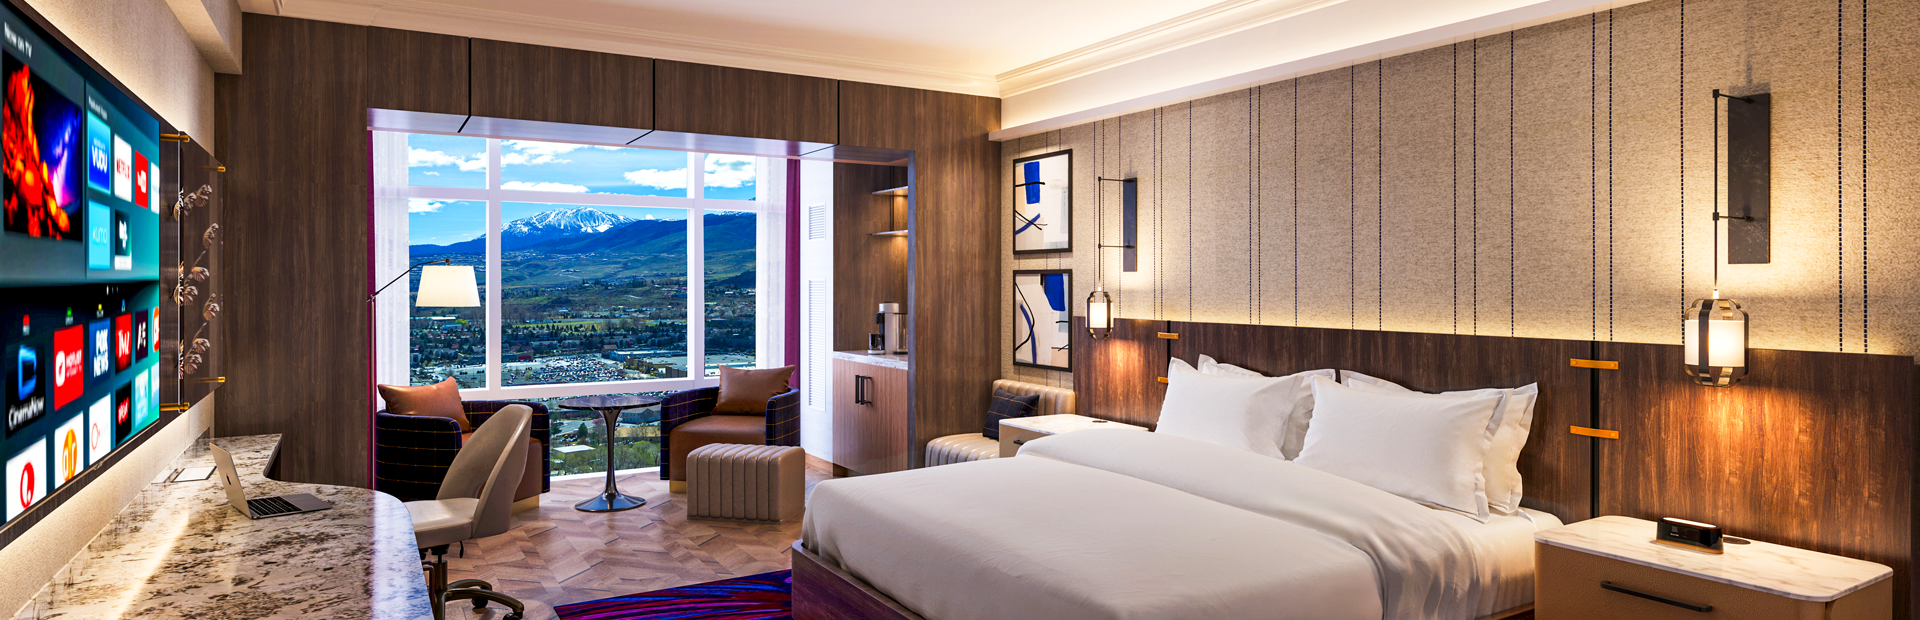 New Concierge Hotel Tower Room at Atlantis